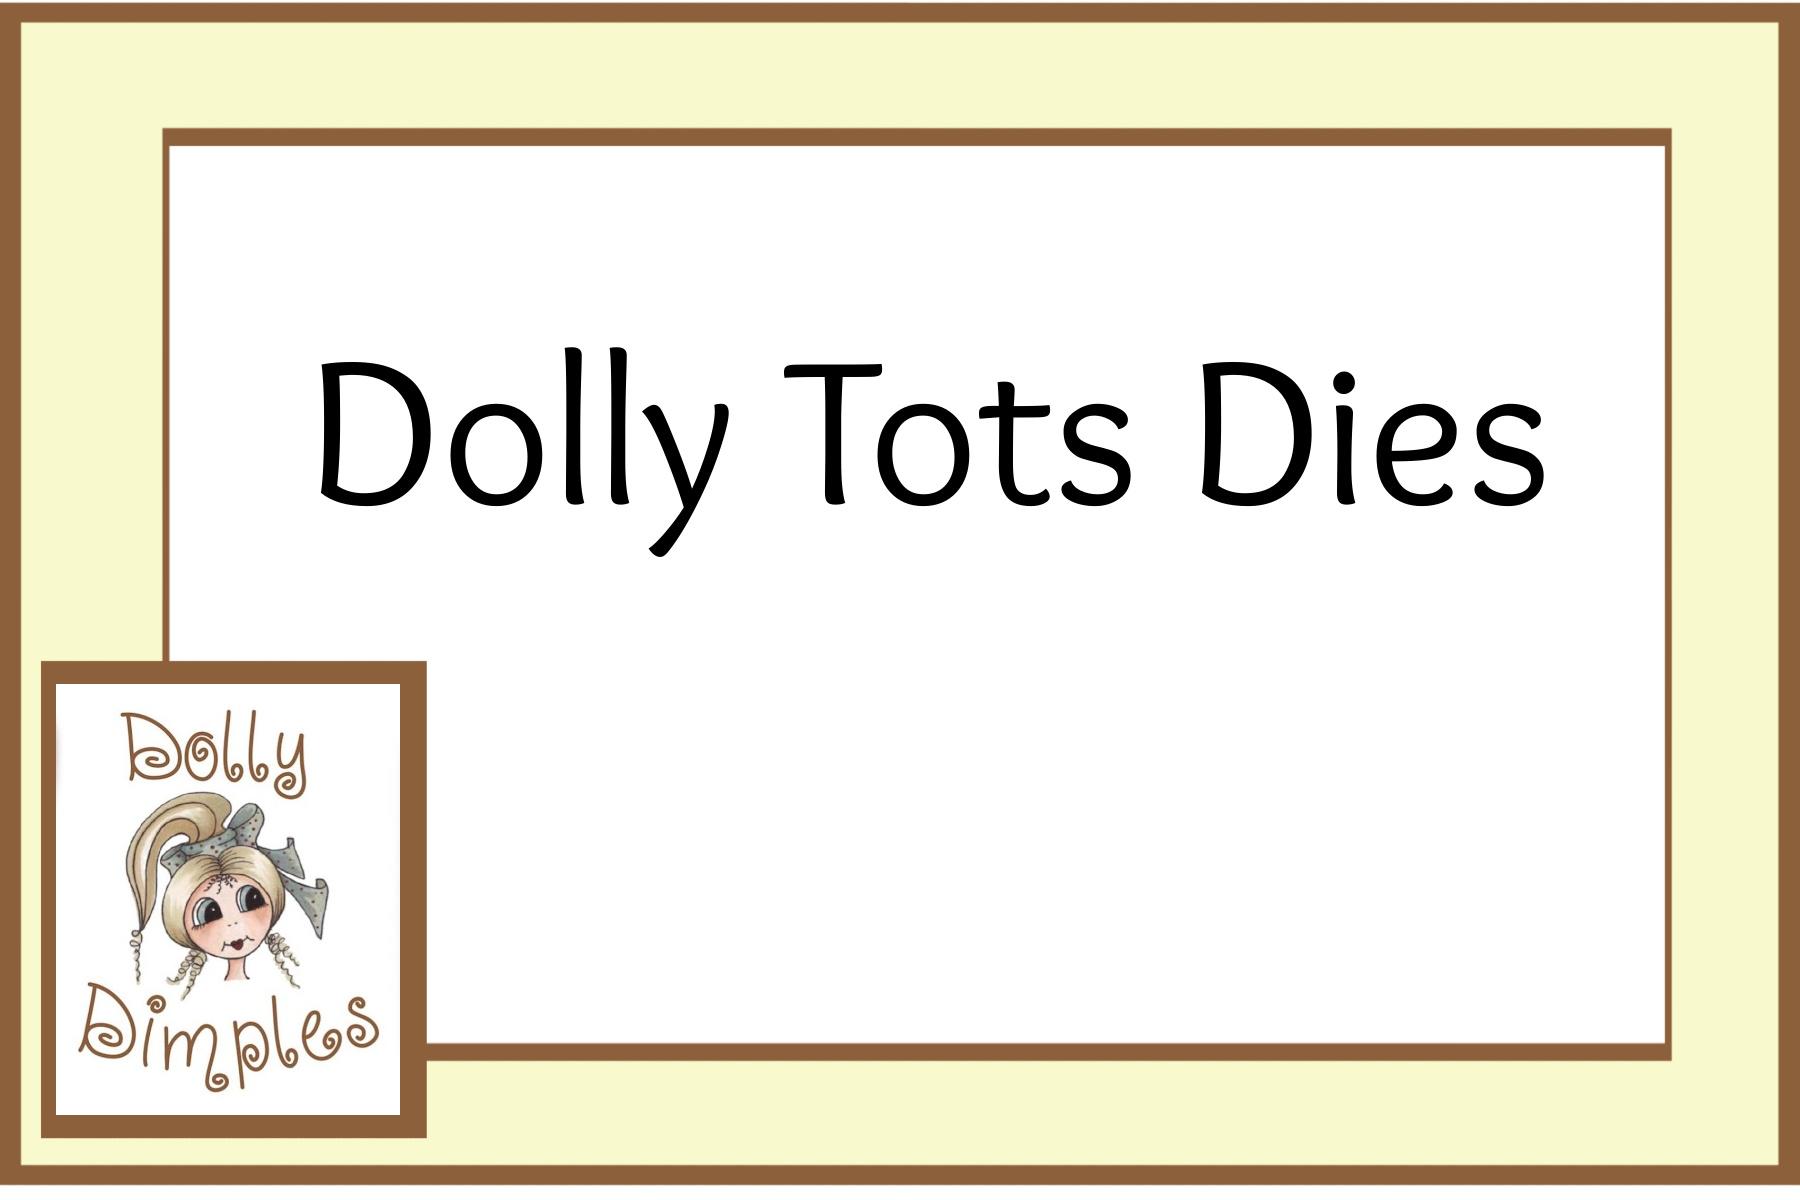 Dolly Tots Dies